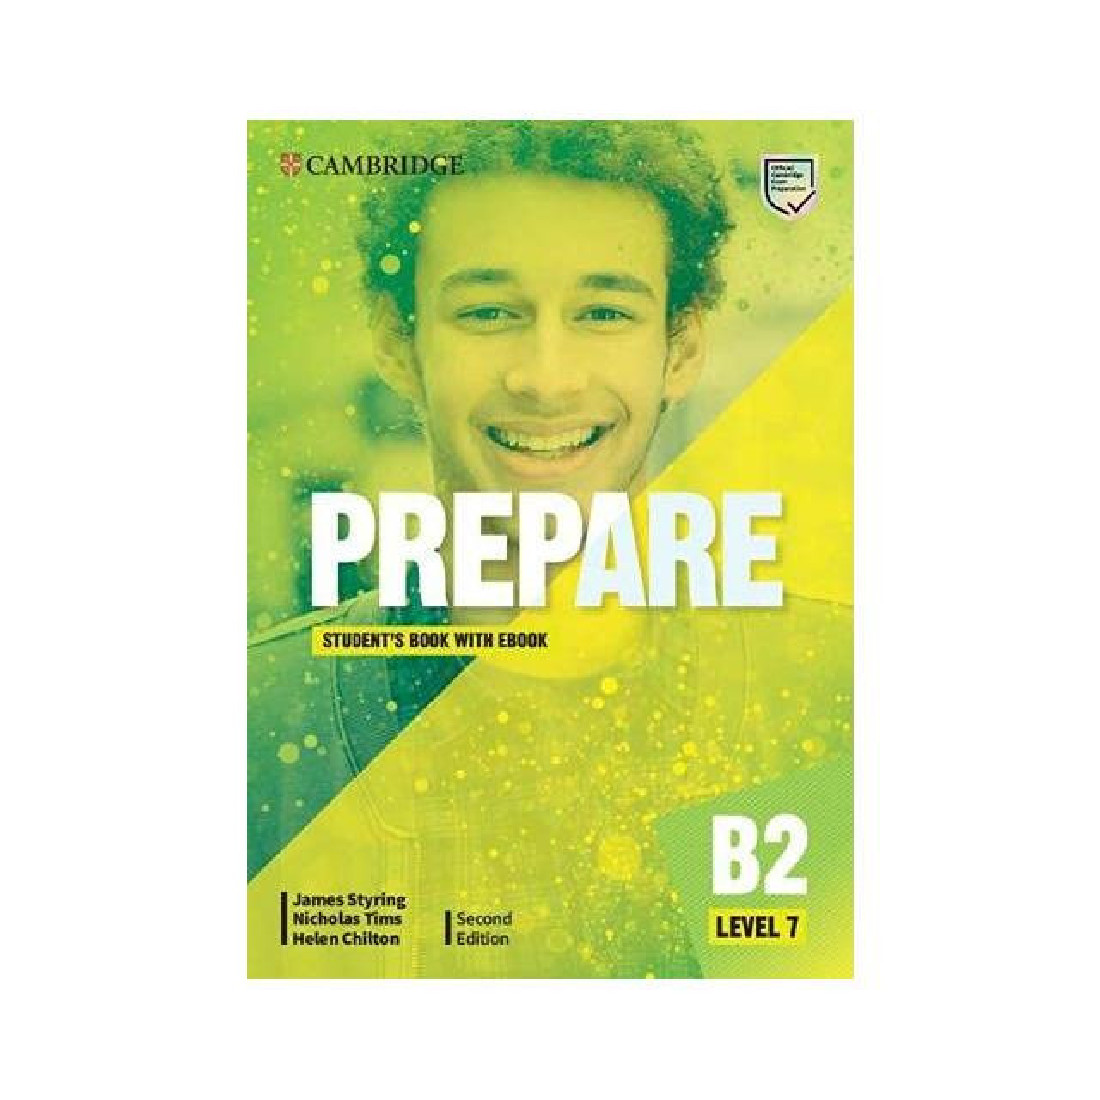 Учебник prepare. Prepare second Edition Level 1. Prepare second Edition Level 7. Учебник Cambridge prepare. Cambridge prepare b2 Level 7.